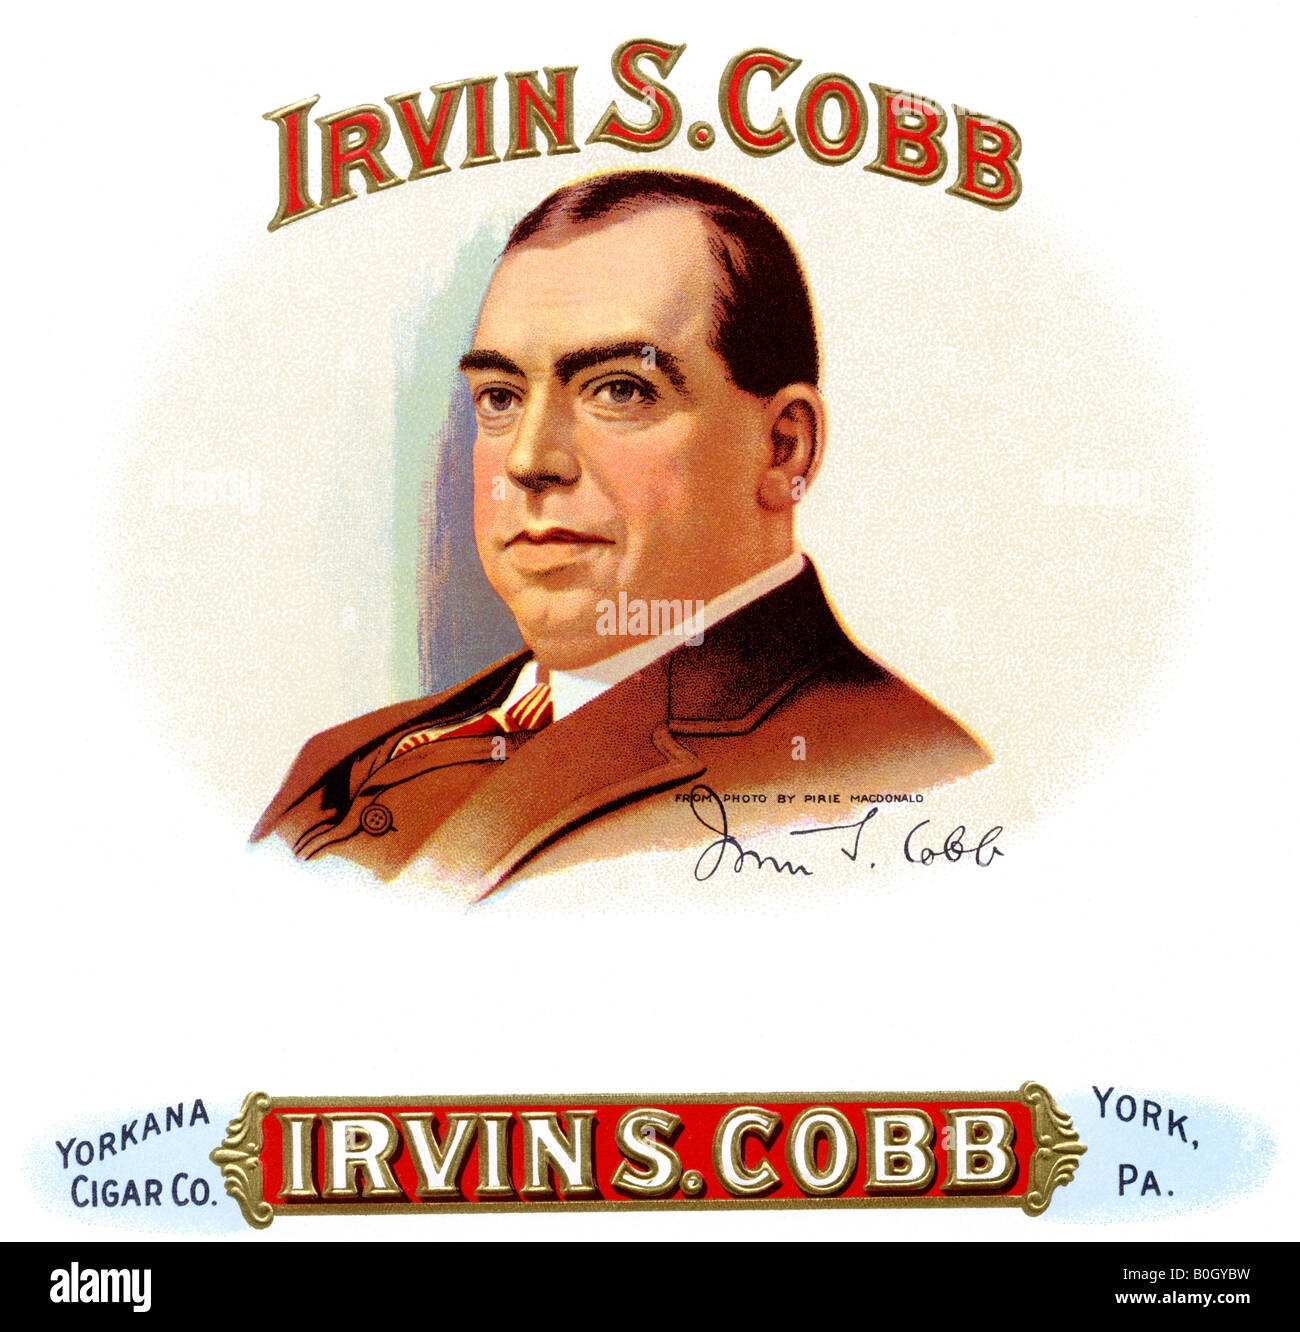 Irvin S. Cobb Foto de stock